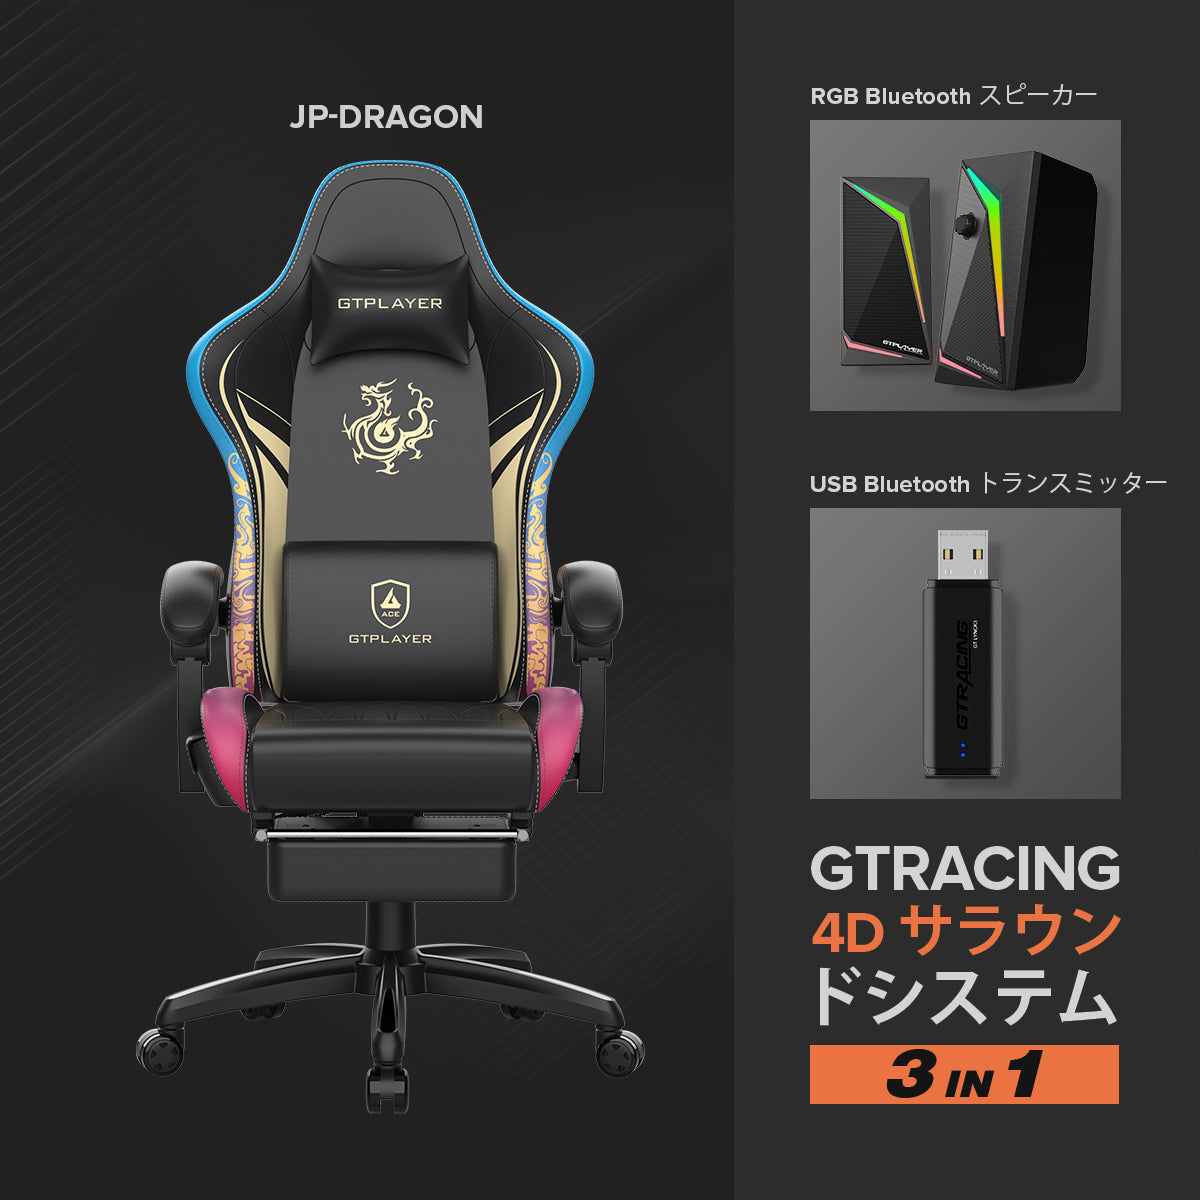 4D サラウンドシステム シリーズ // DRAGON 3in1(DRAGON+GT Spker+USBトランスミッター)